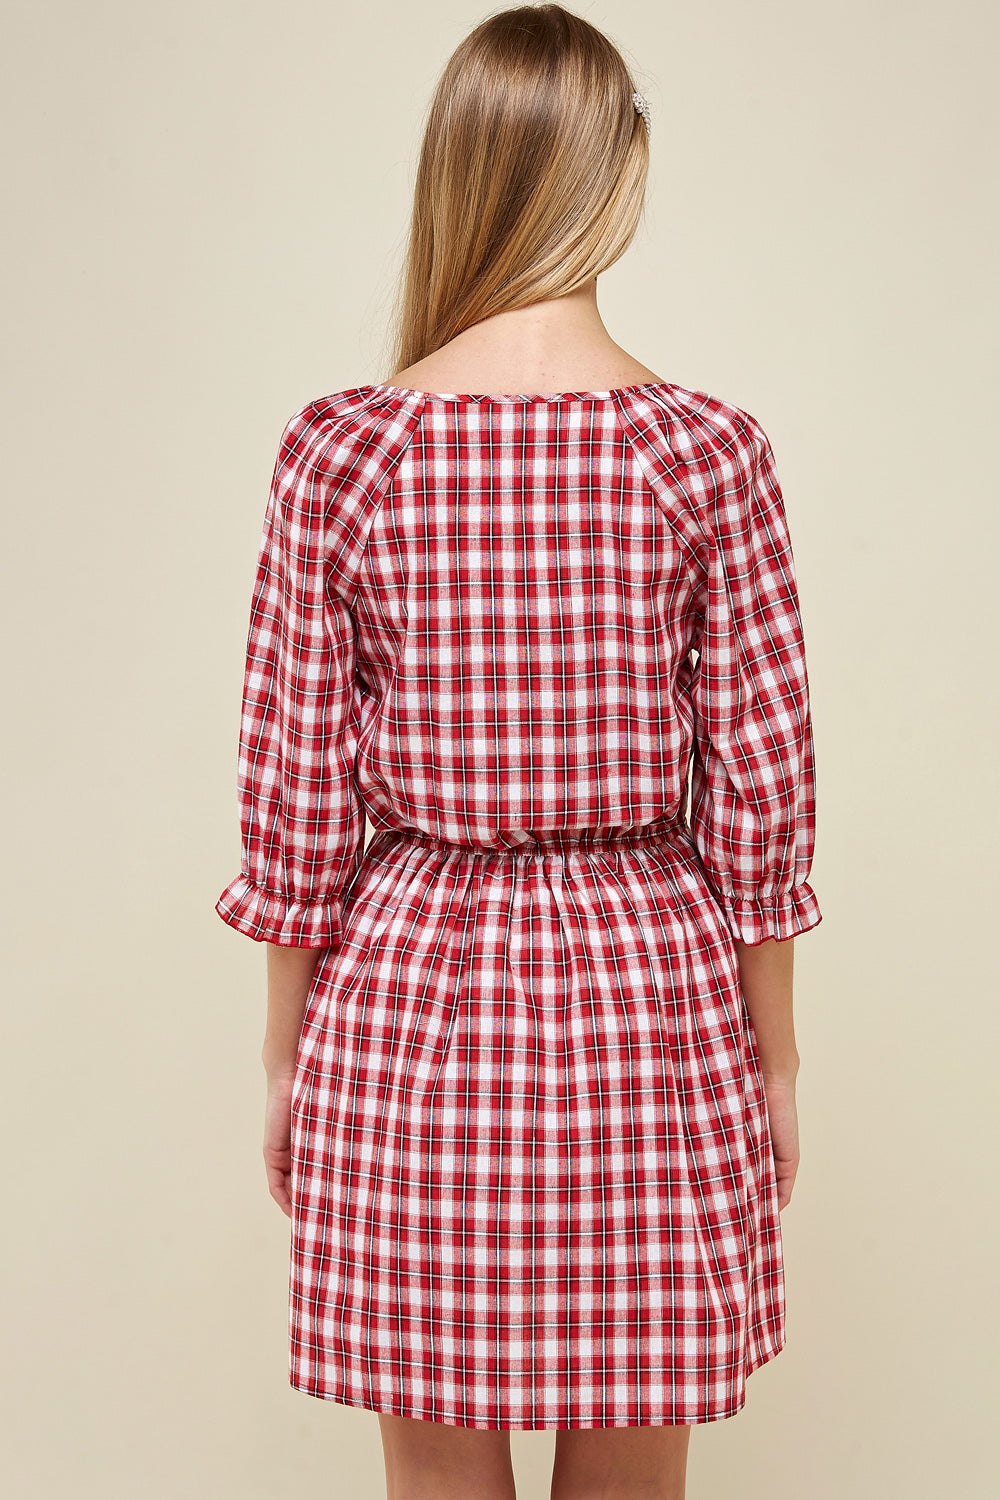 [$5/piece] Plaid Printed 3/4 Sleeve Short Dress